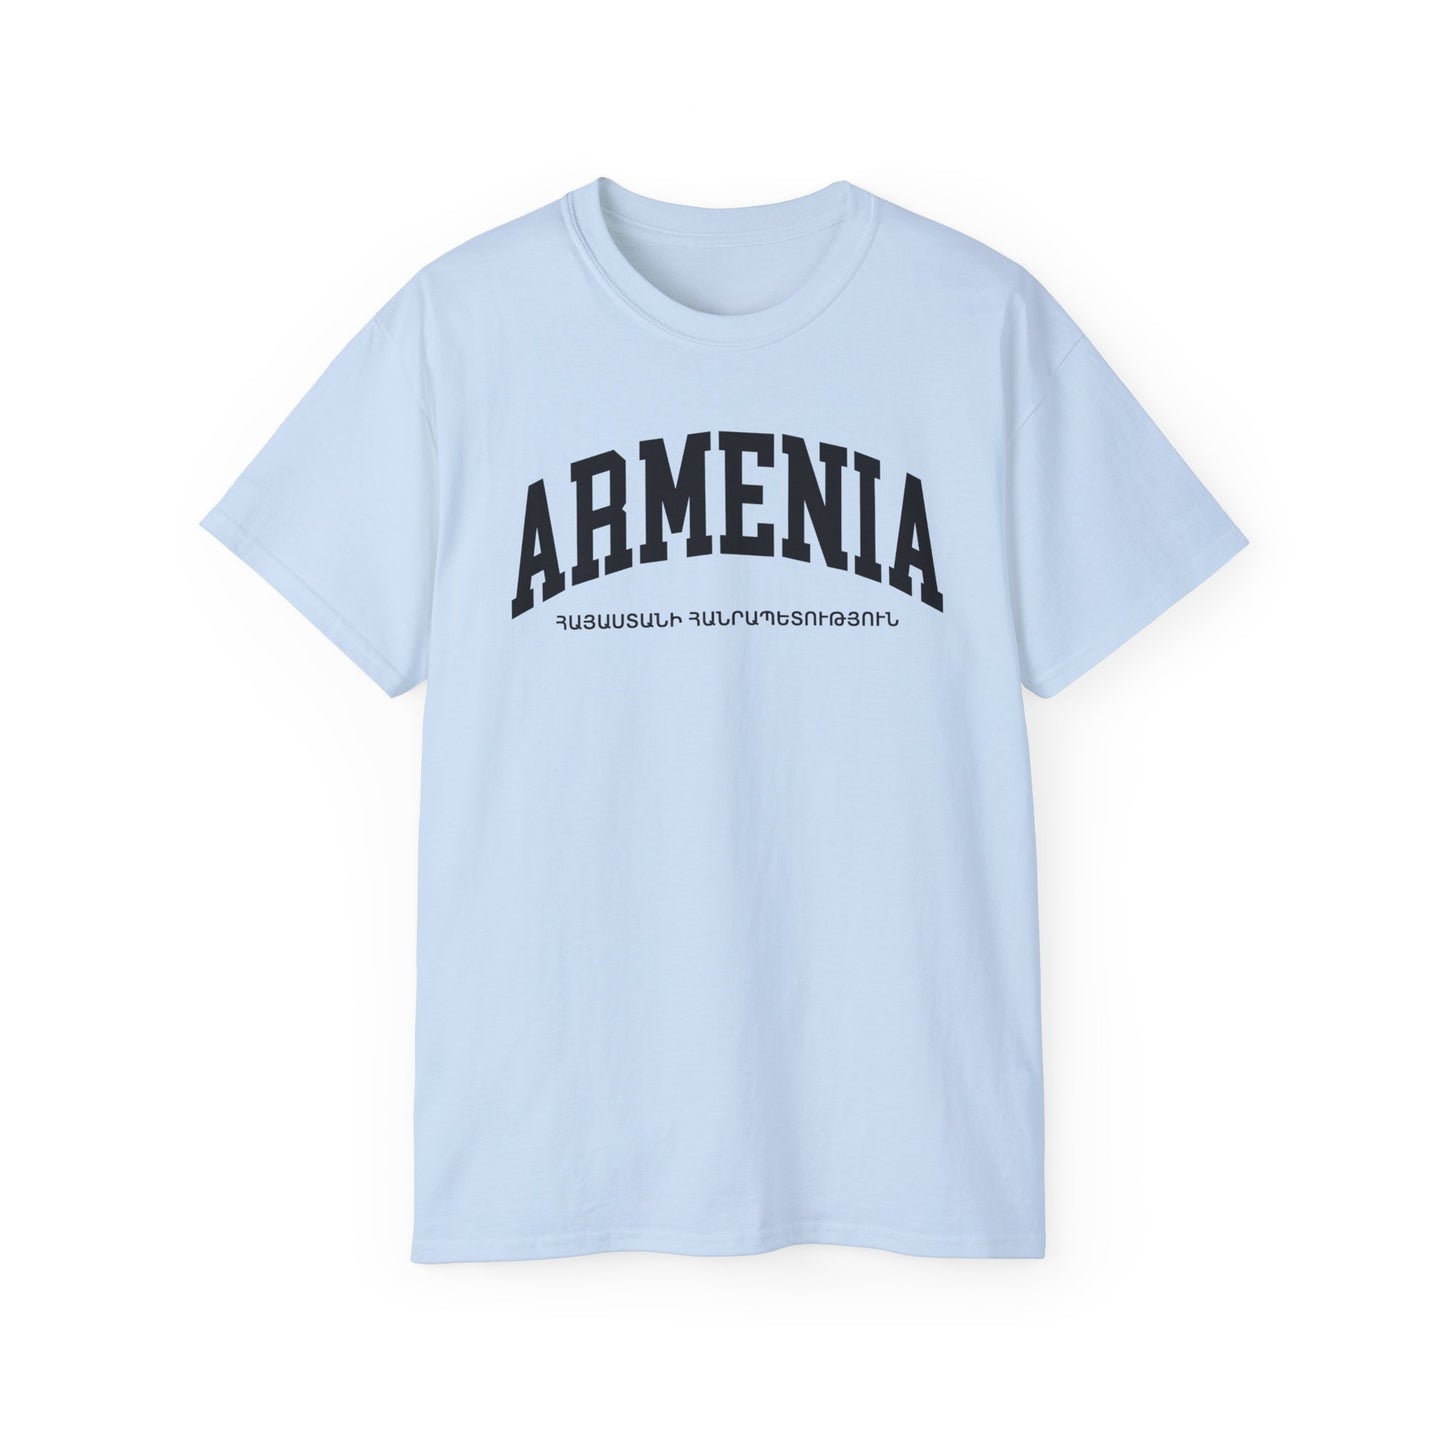 Armenia Tee